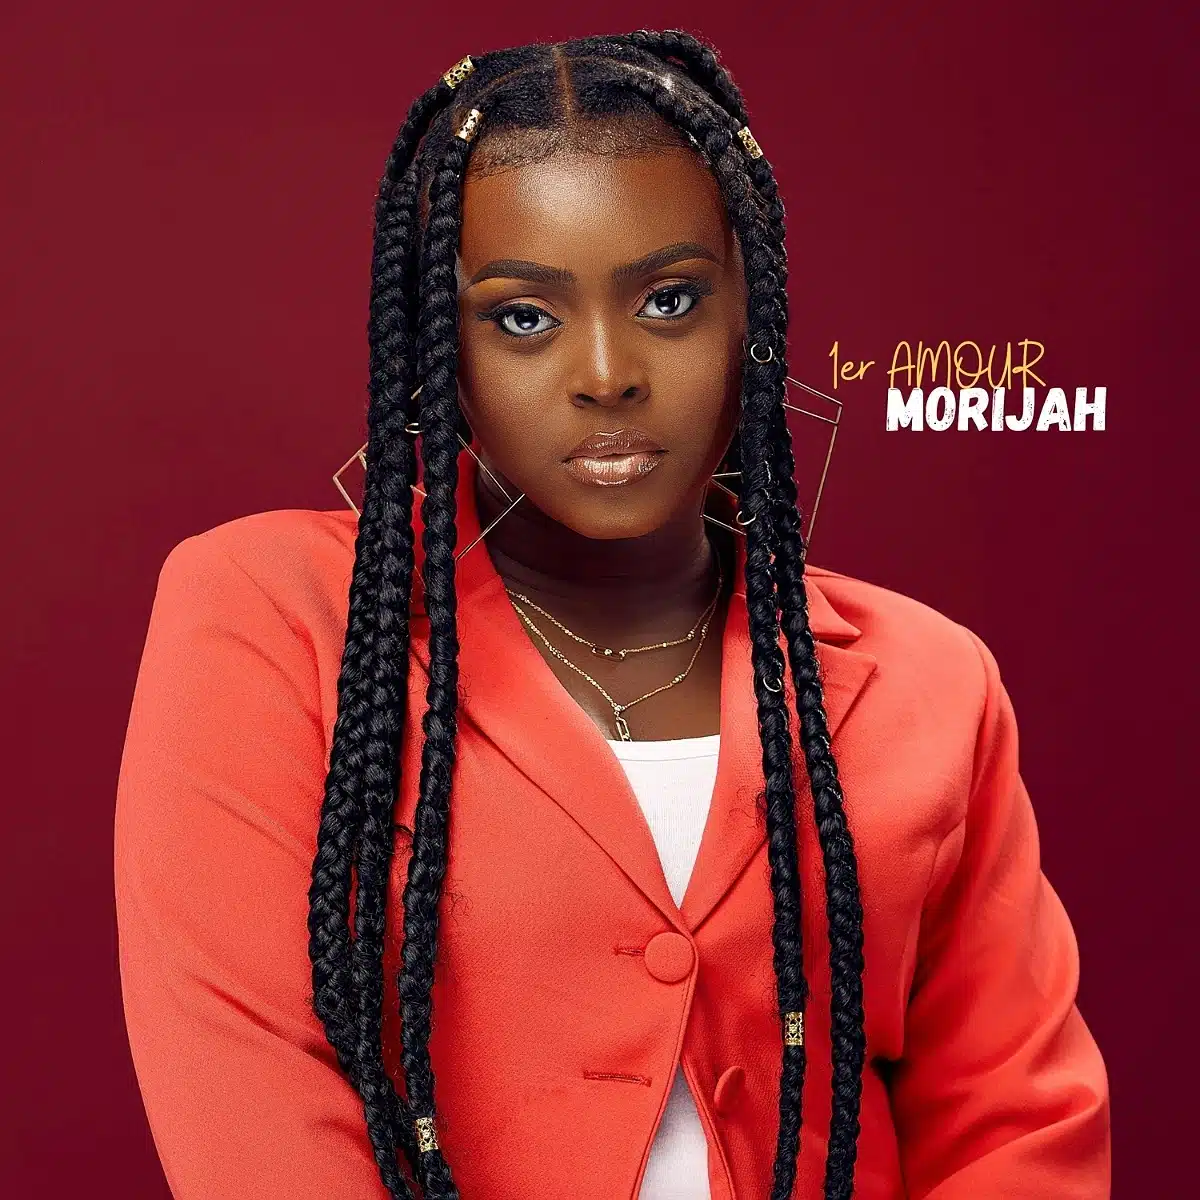 DOWNLOAD: Morijah – “Mon ami” (Video & Audio) Mp3